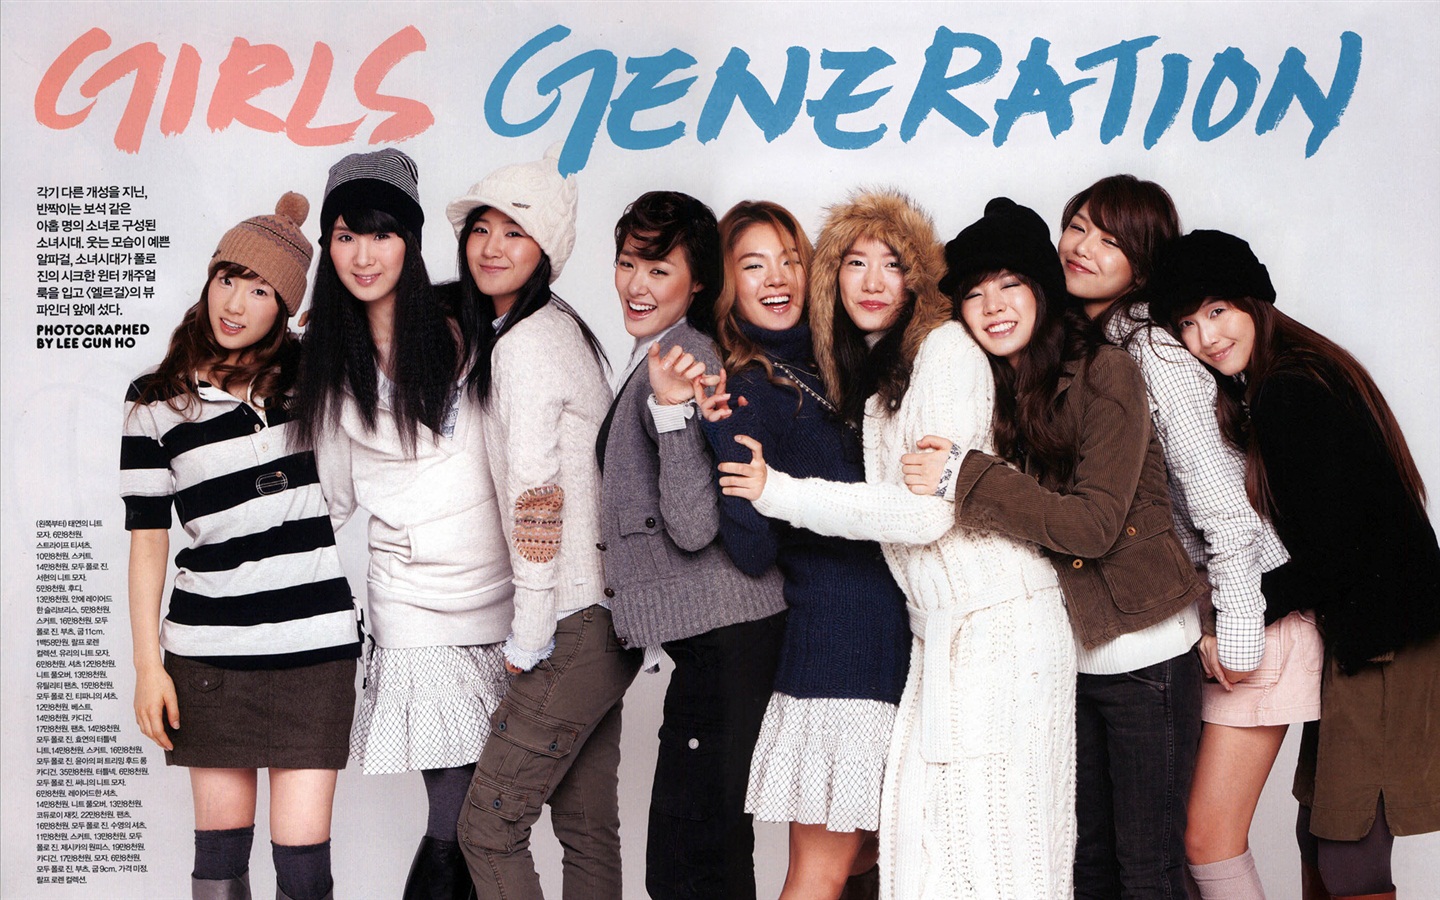 Girls Generation neuesten HD Wallpapers Collection #23 - 1440x900